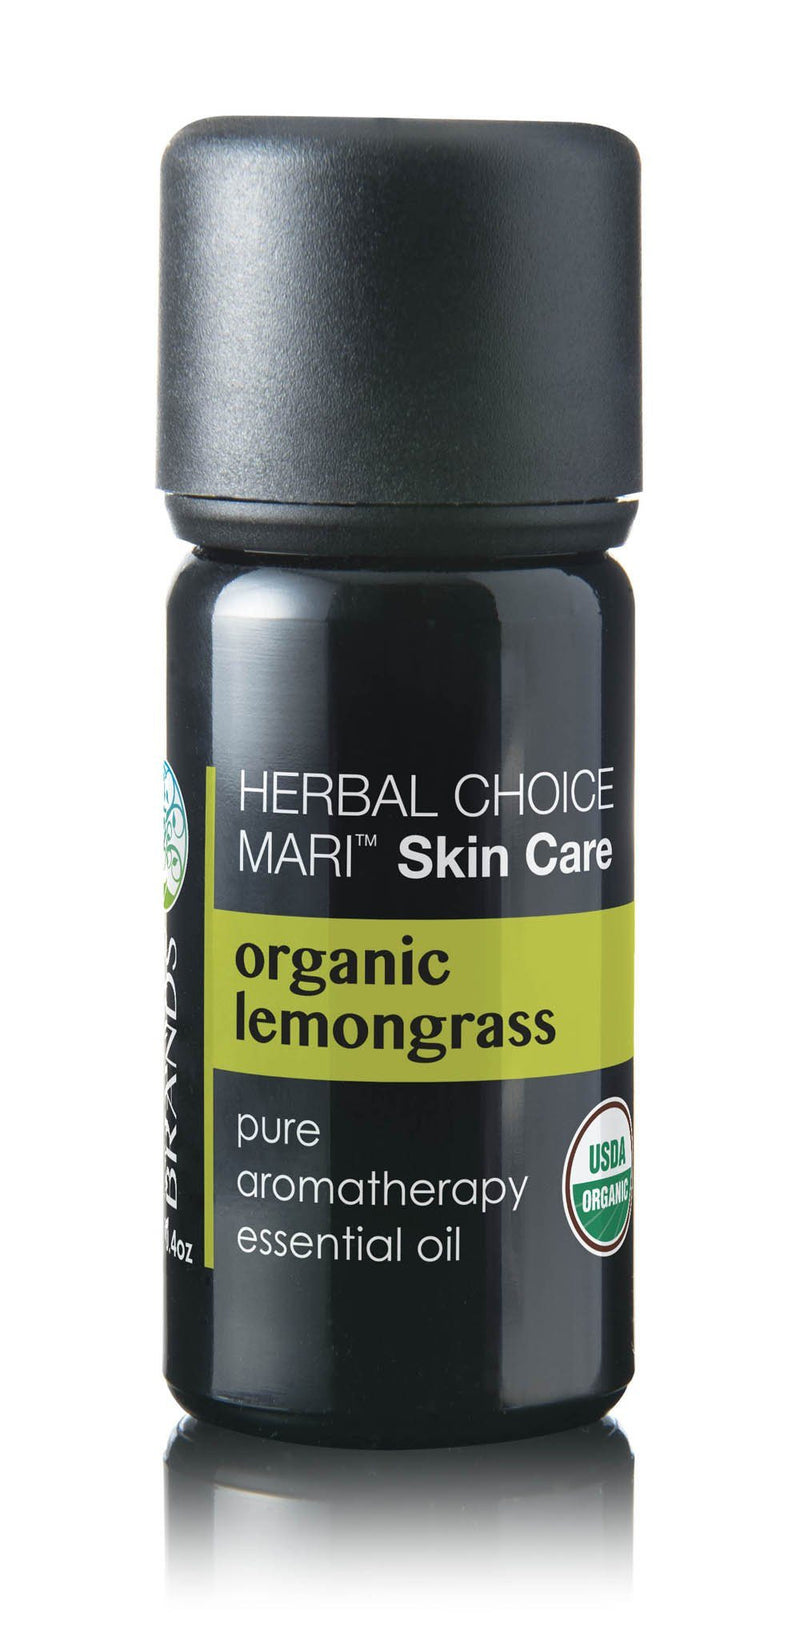 Herbal Choice Mari Organic Lemongrass Essential Oil; 0.3floz Glass - Herbal Choice Mari Organic Lemongrass Essential Oil; 0.3floz Glass - Herbal Choice Mari Organic Lemongrass Essential Oil; 0.3floz Glass